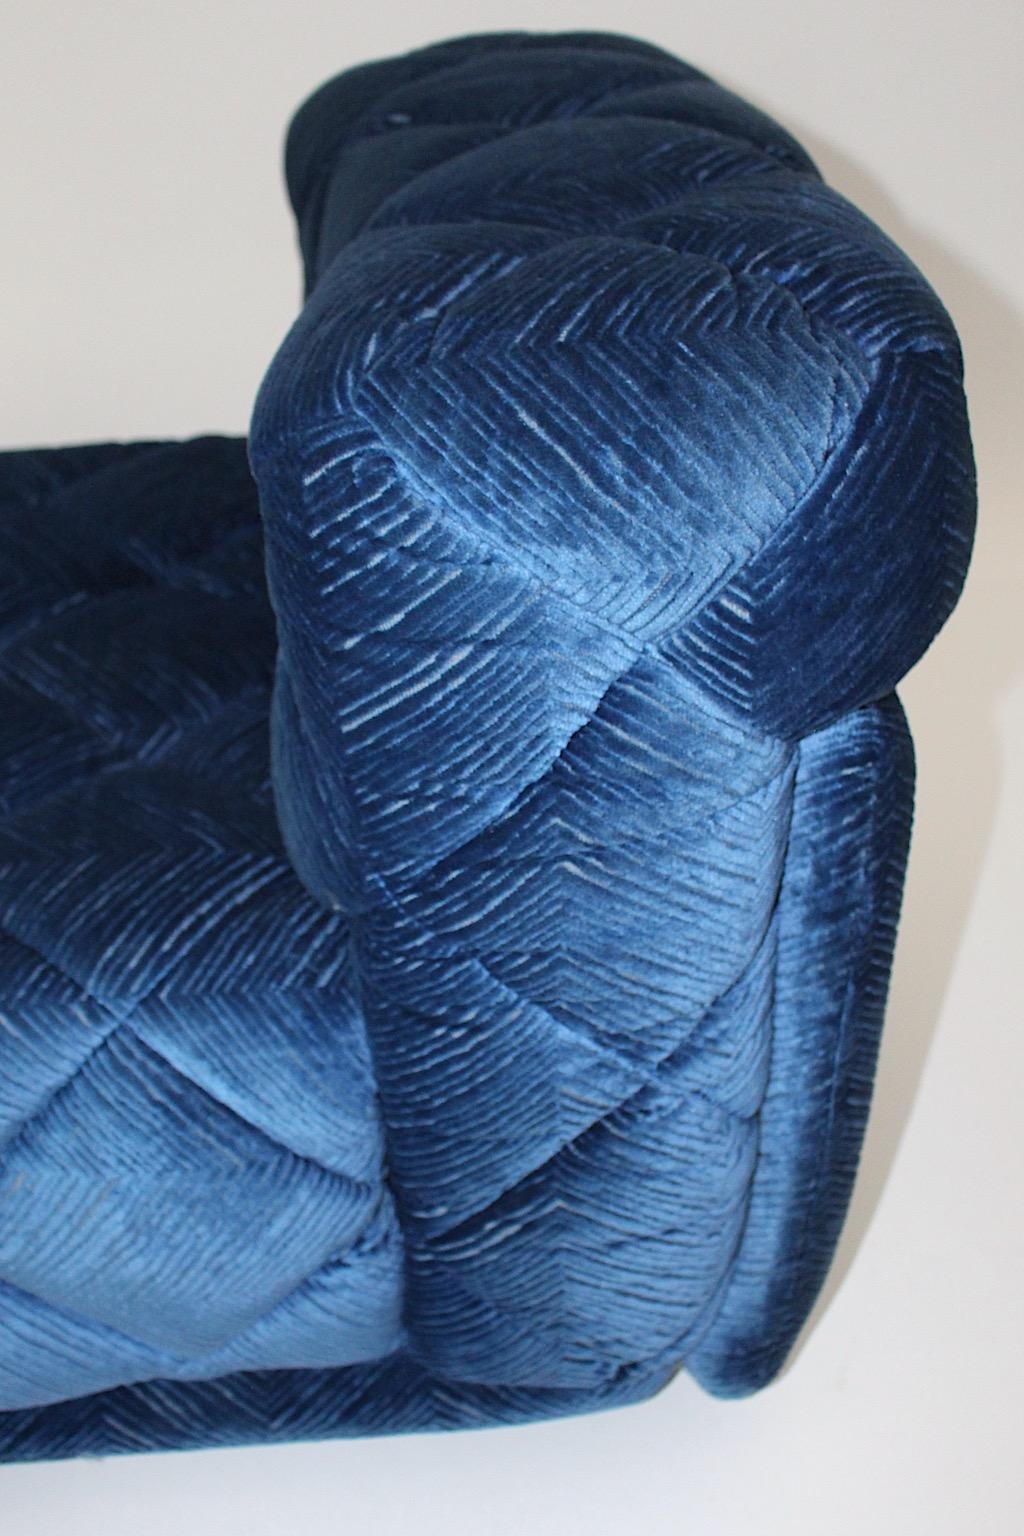 Fabric Modular Space Age Vintage Blue Velvet Lounge Chair Rhombos Wittmann 1970 Austria For Sale